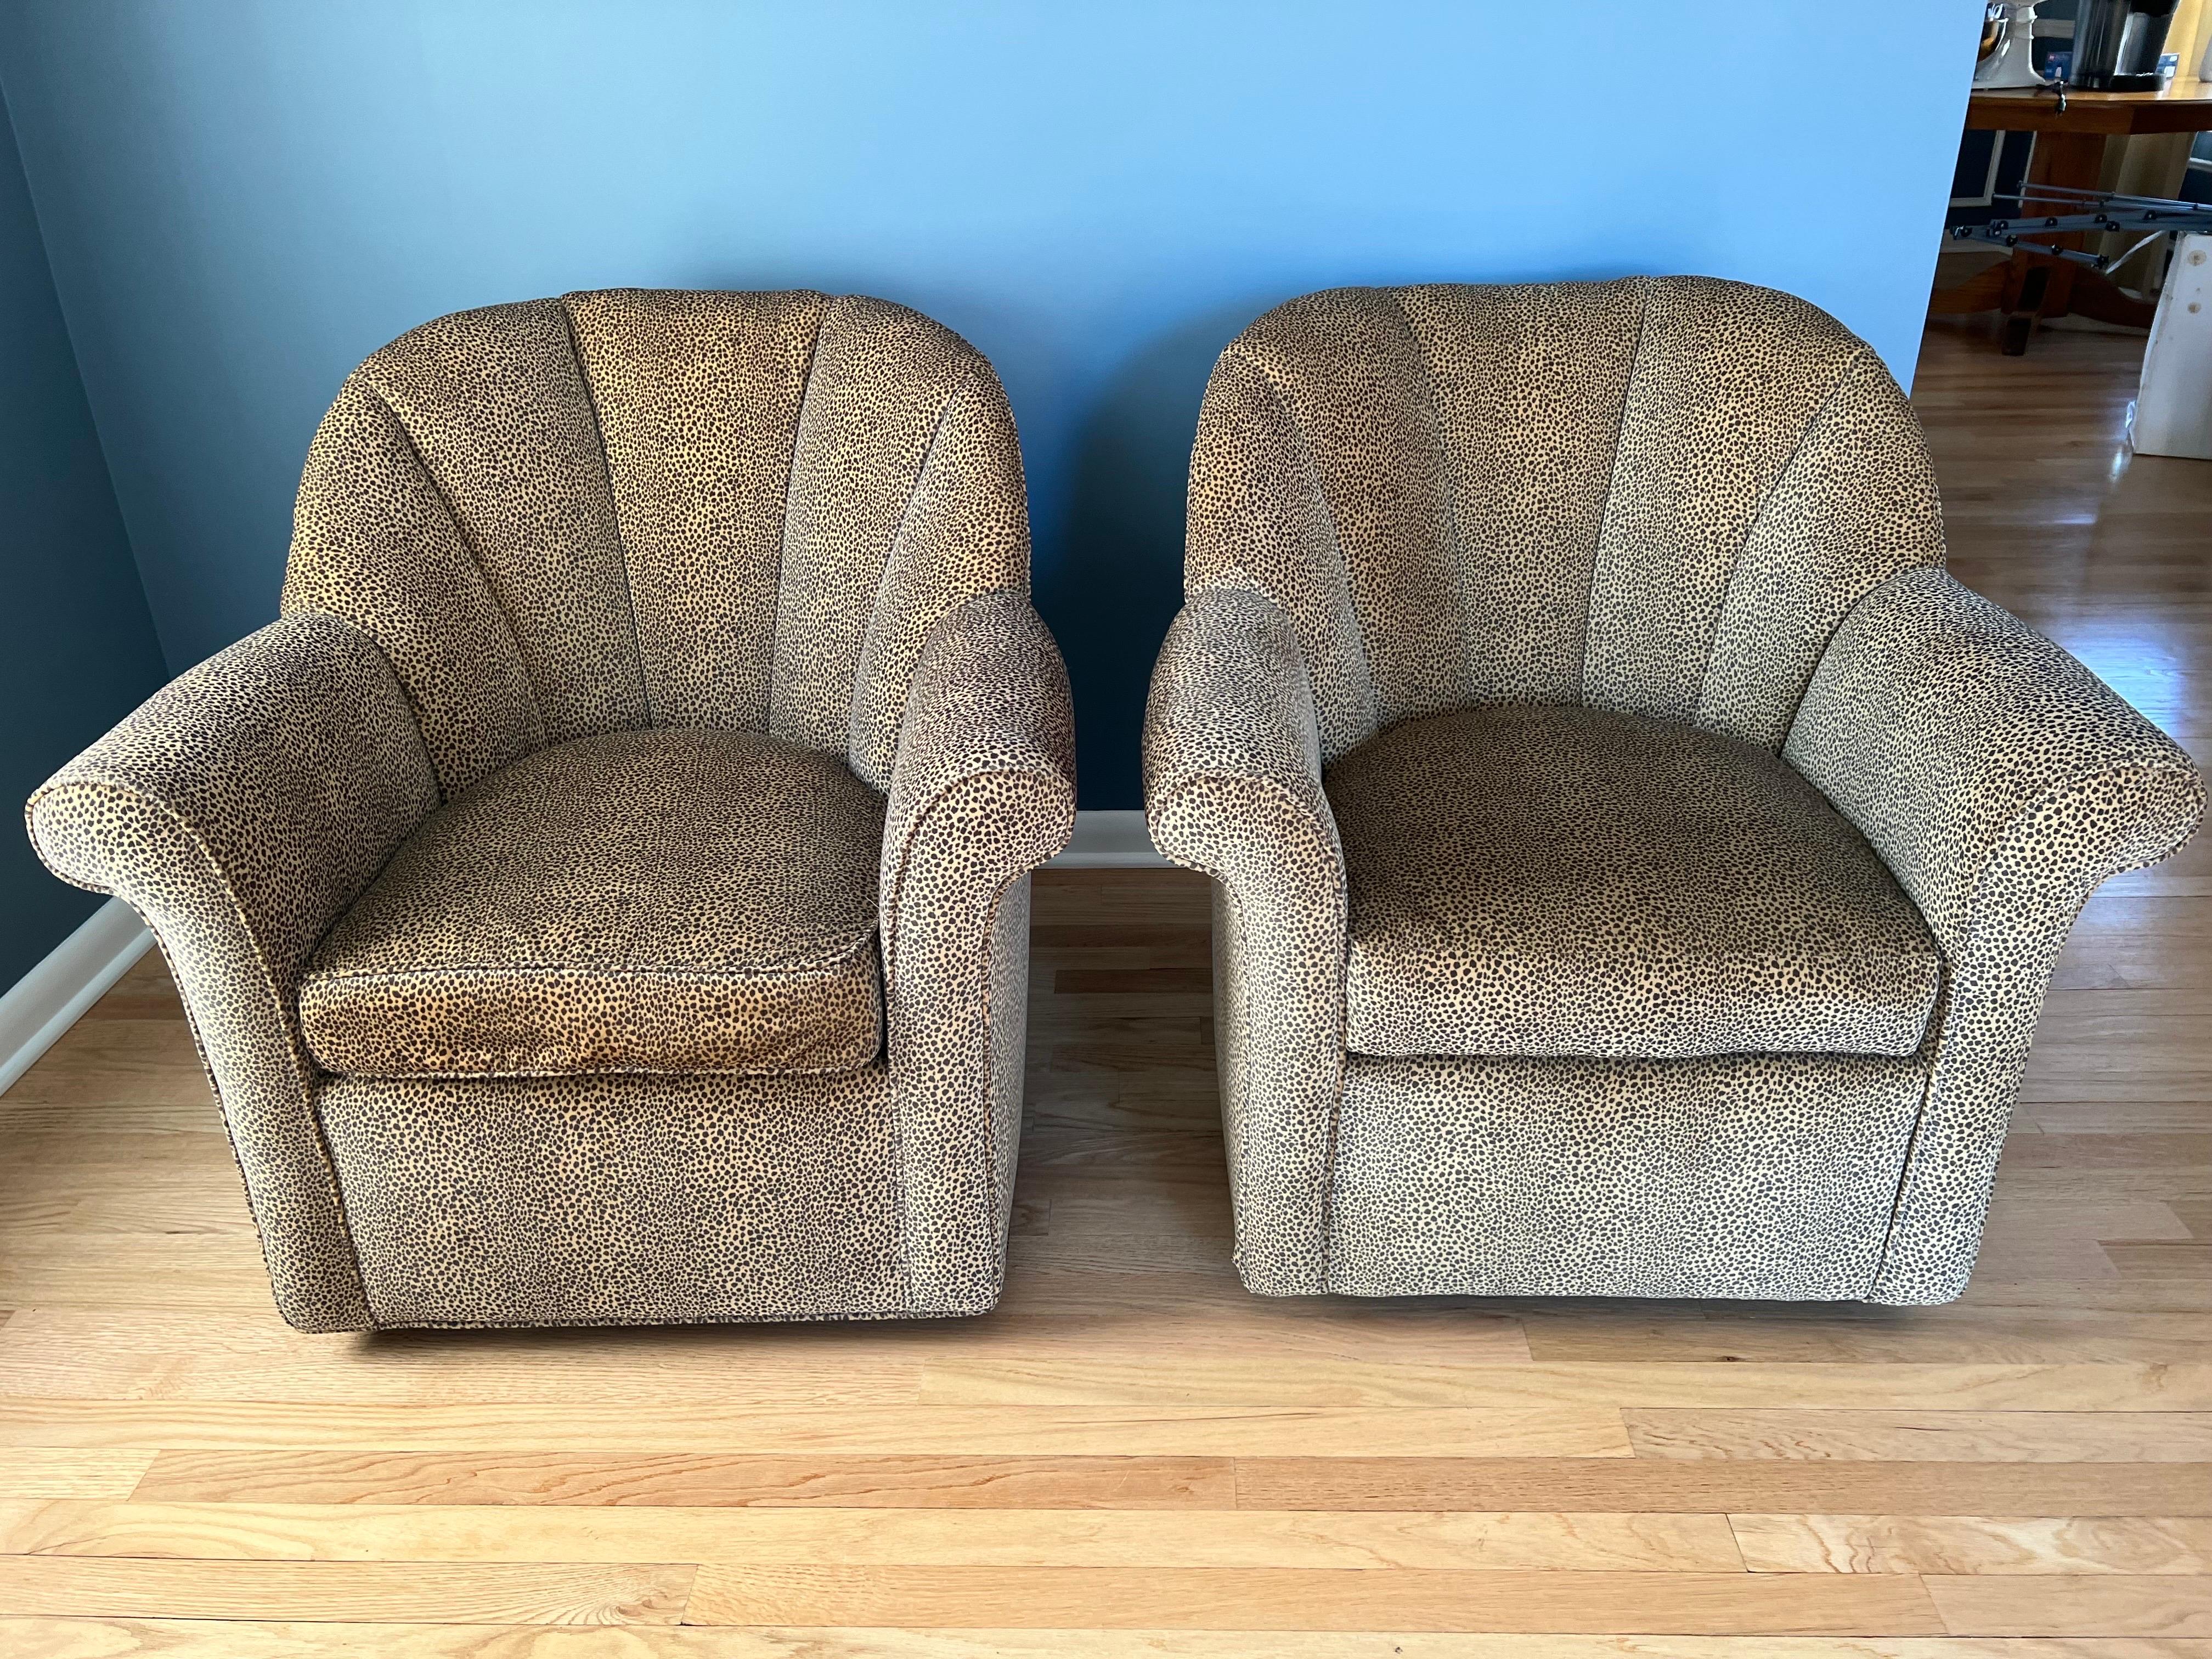 Pair of Animal Print Swivel Chairs 2